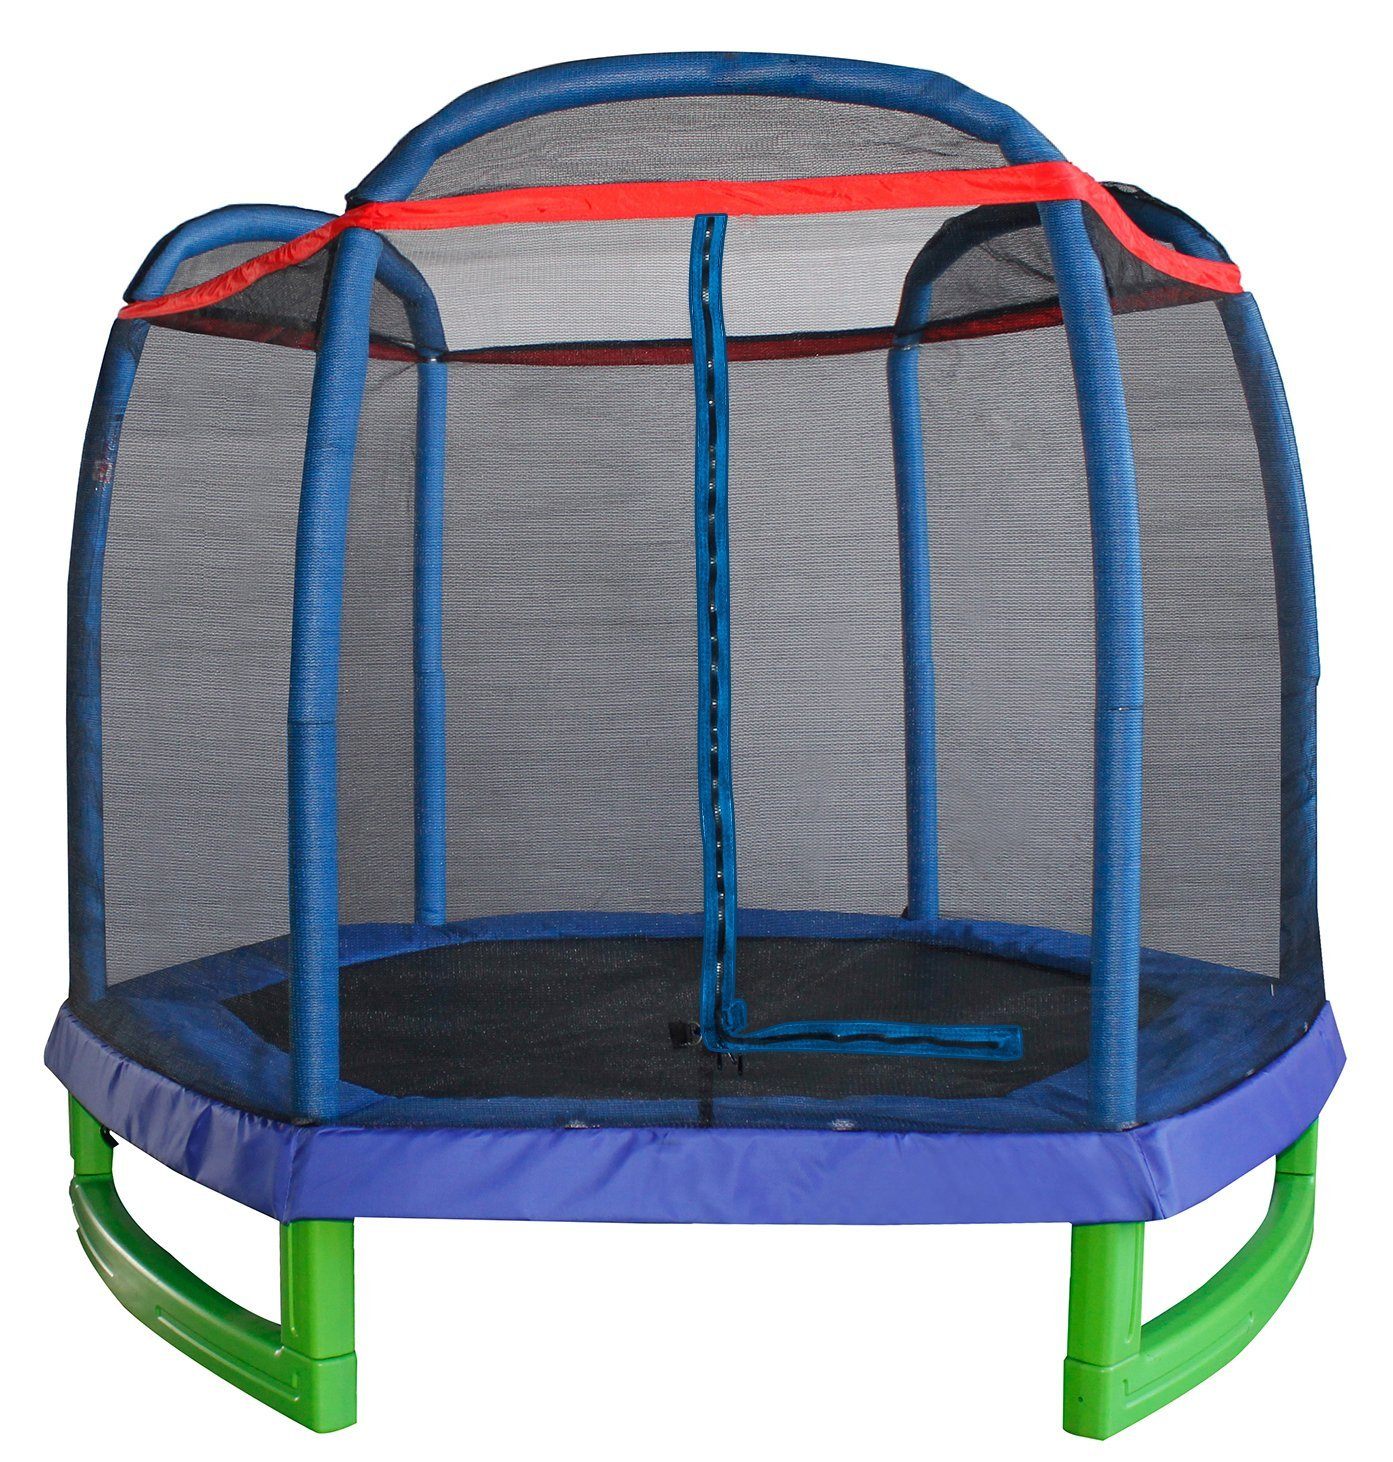 merax-7-foot-kids-trampoline-and-enclosure-set